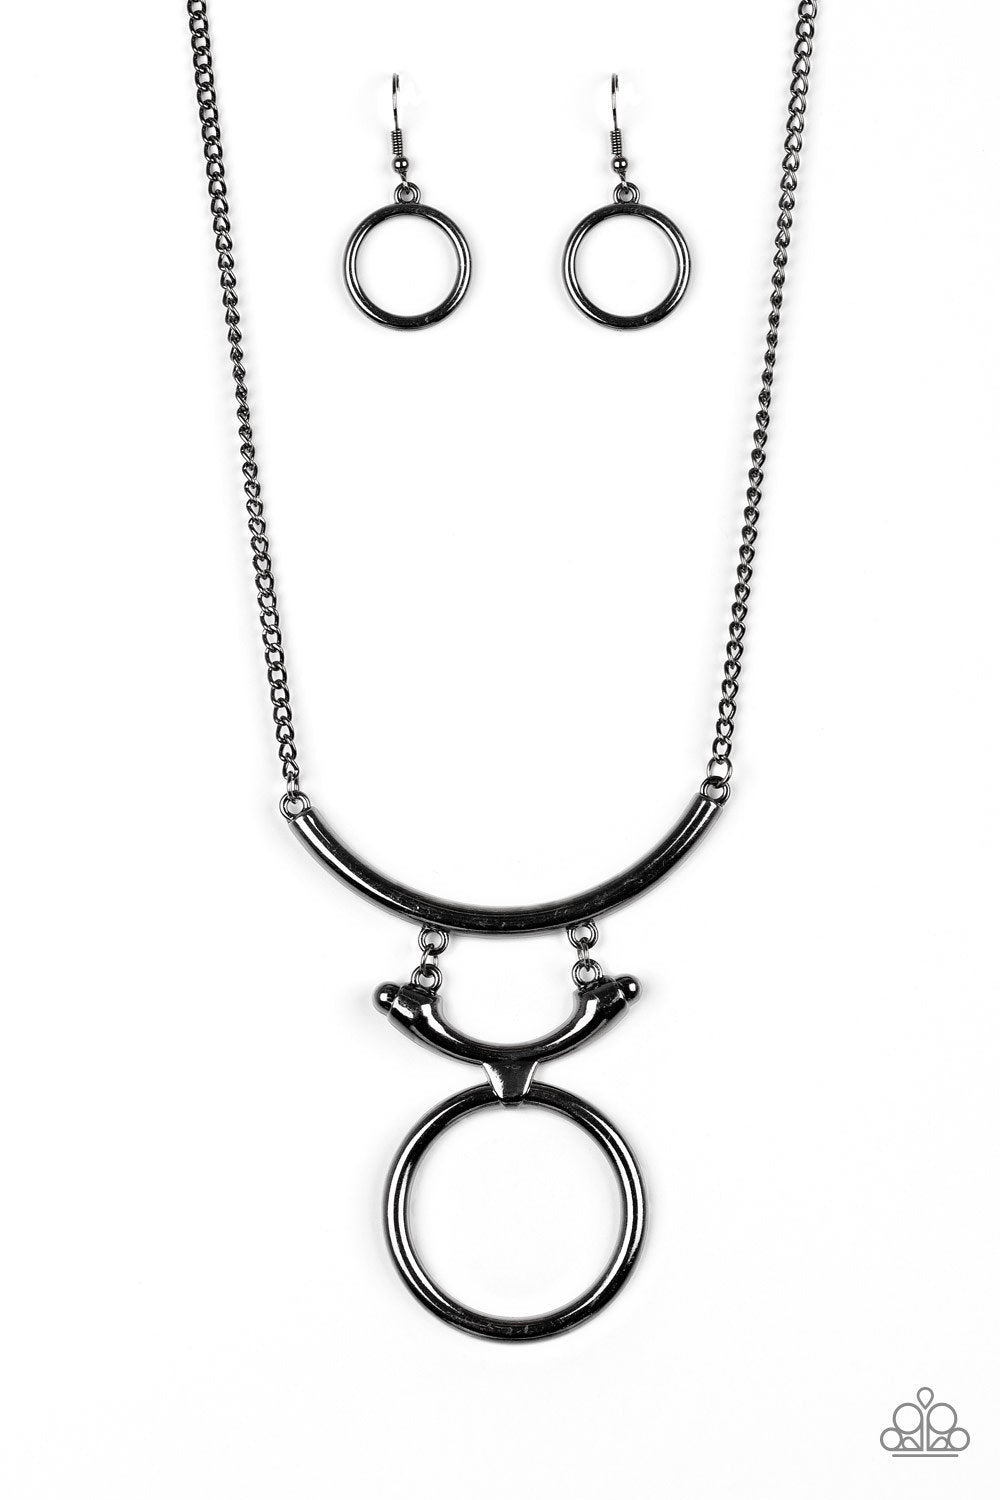 Walk Like An Egyptian Gunmetal Black Necklace - Paparazzi Accessories - lightbox -CarasShop.com - $5 Jewelry by Cara Jewels